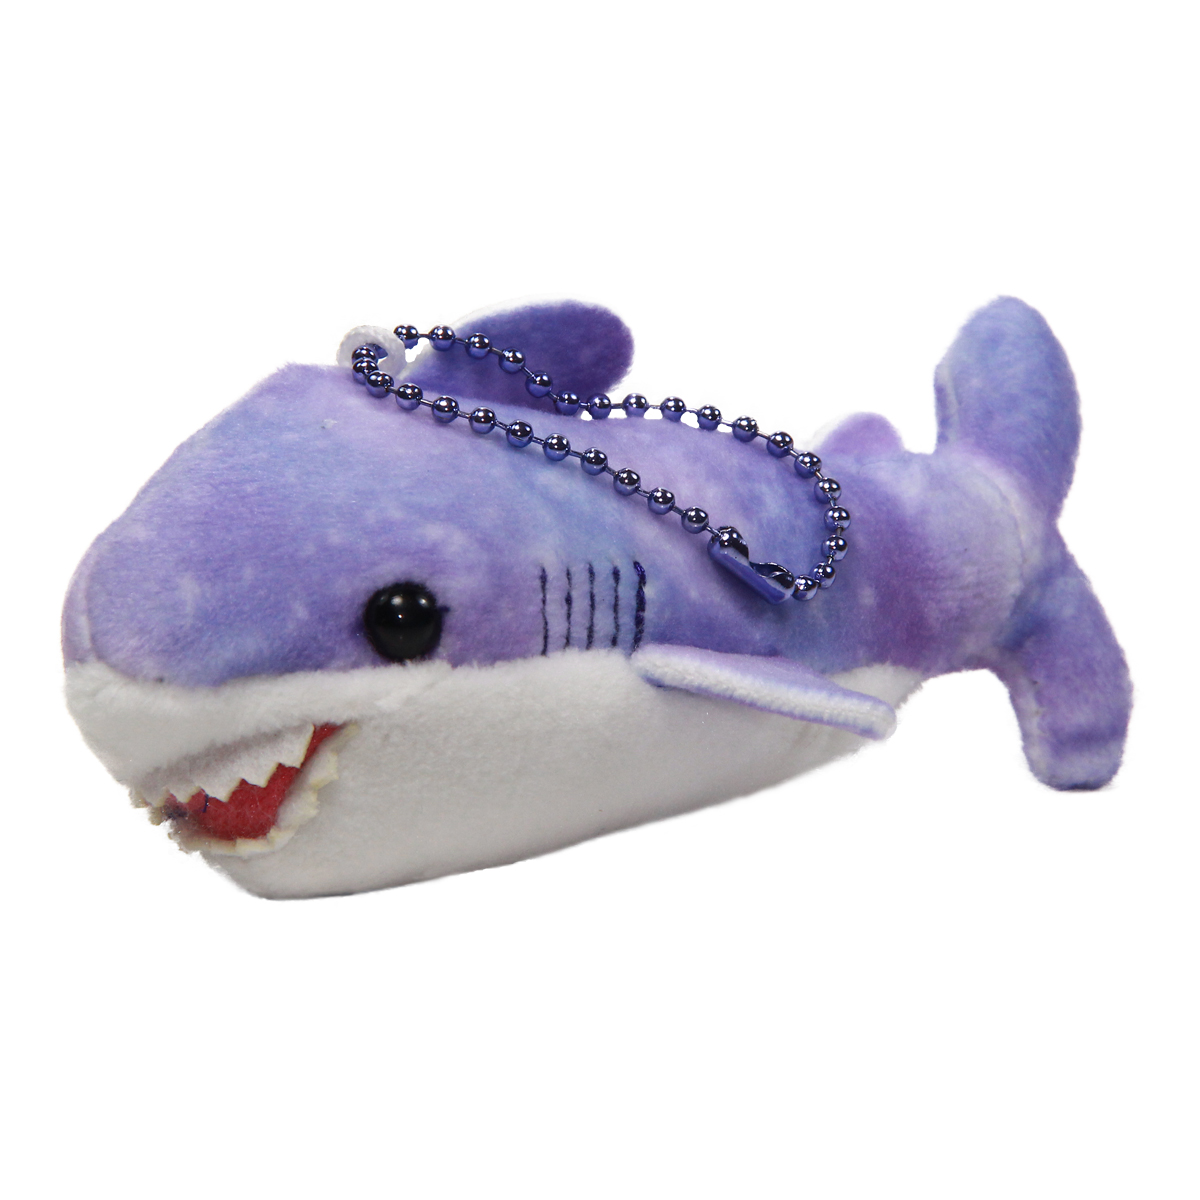 Aquarium Colorful Collection Plush Shark Plush Toy Purple Keychain 4 Inches